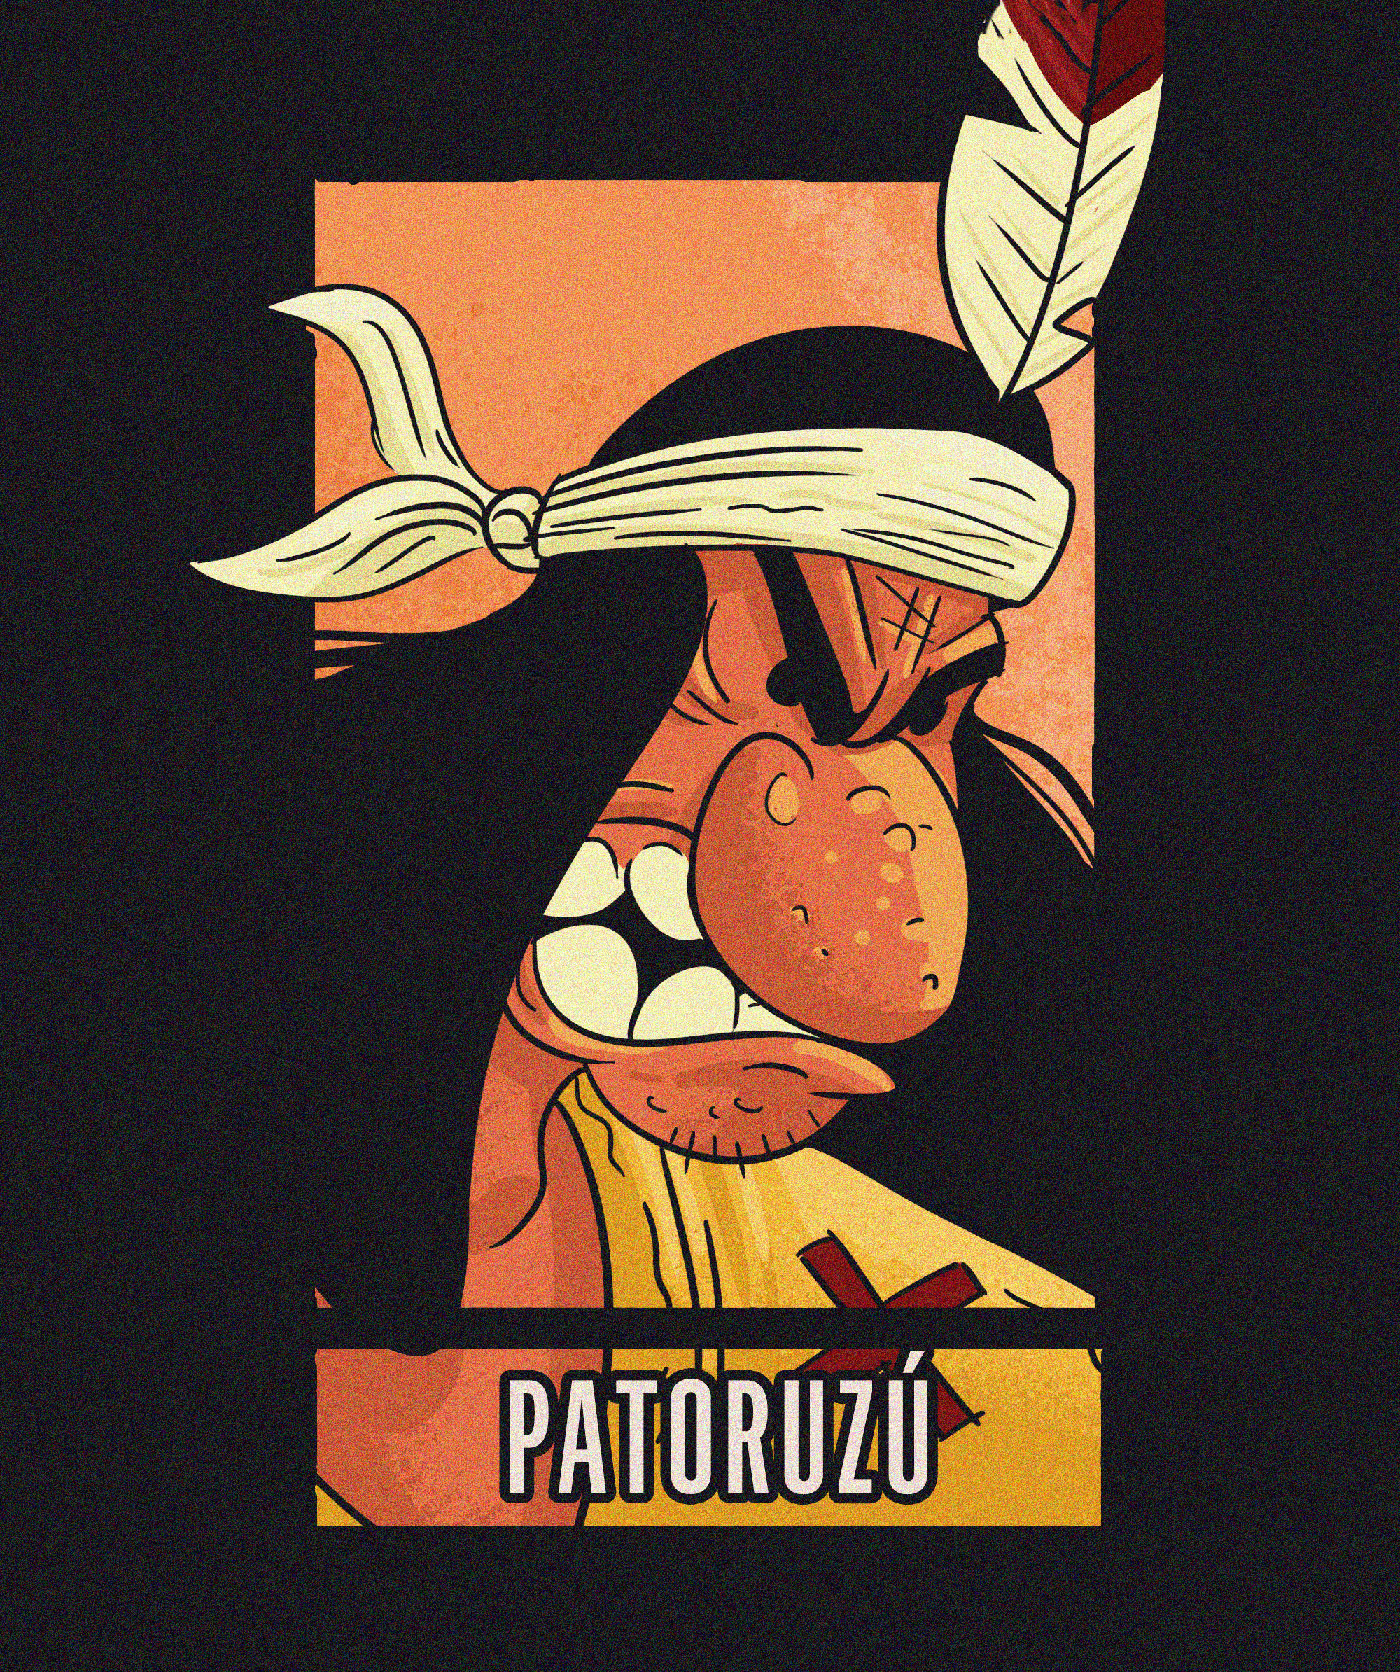 Aang antman chapulin colorado character desing comic ILLUSTRATION  Patoruzu six fan art TMNT wolverine